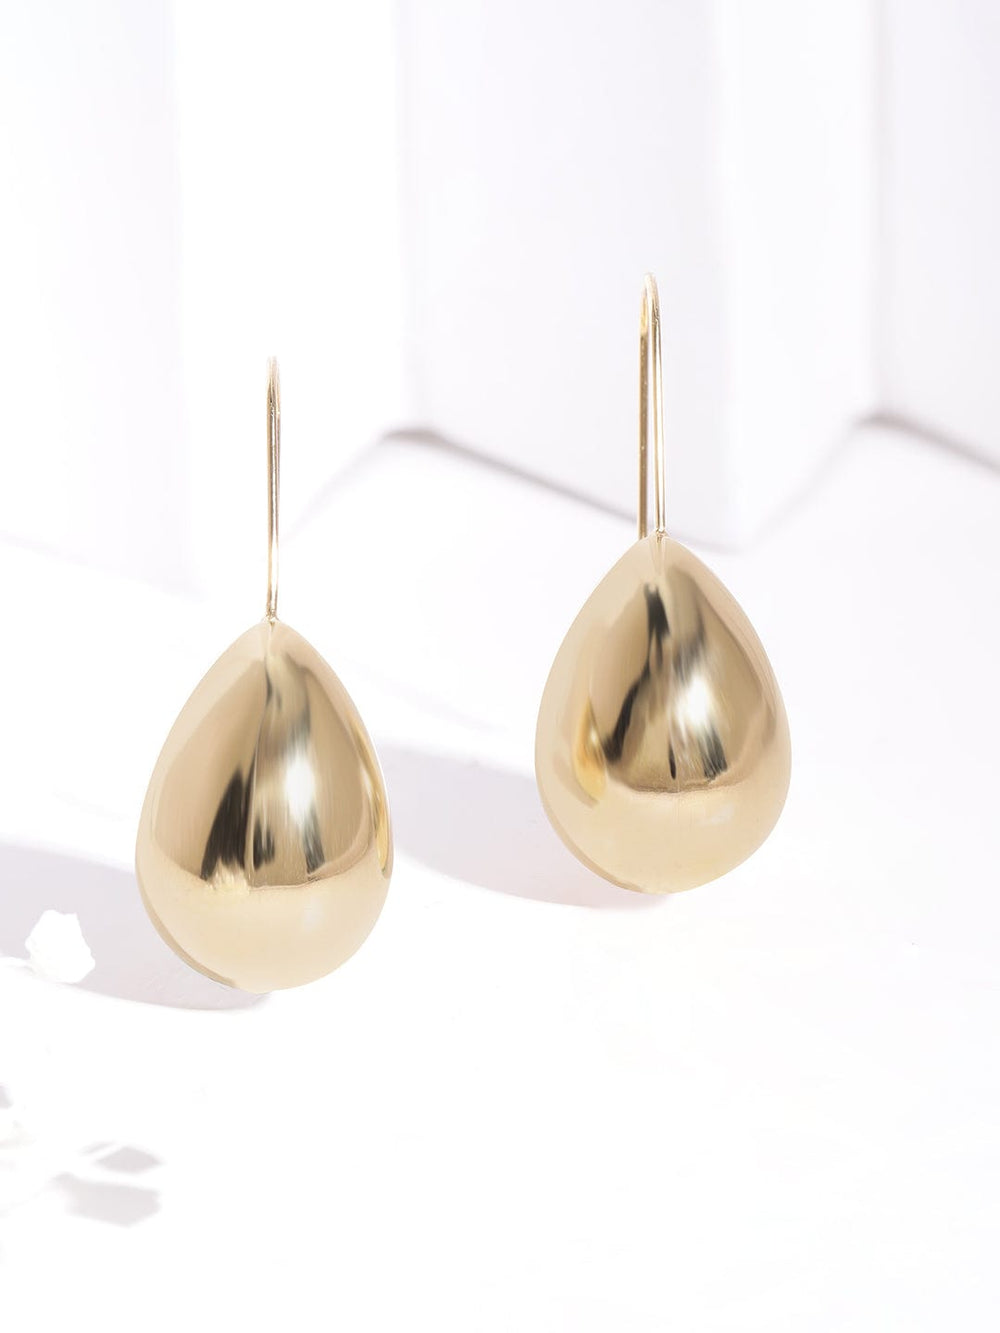 Stainless Steel 18 KT Gold Plated  Waterproop tarnish-free Pendulum Drop Wirehoop Earring Drop Earrings